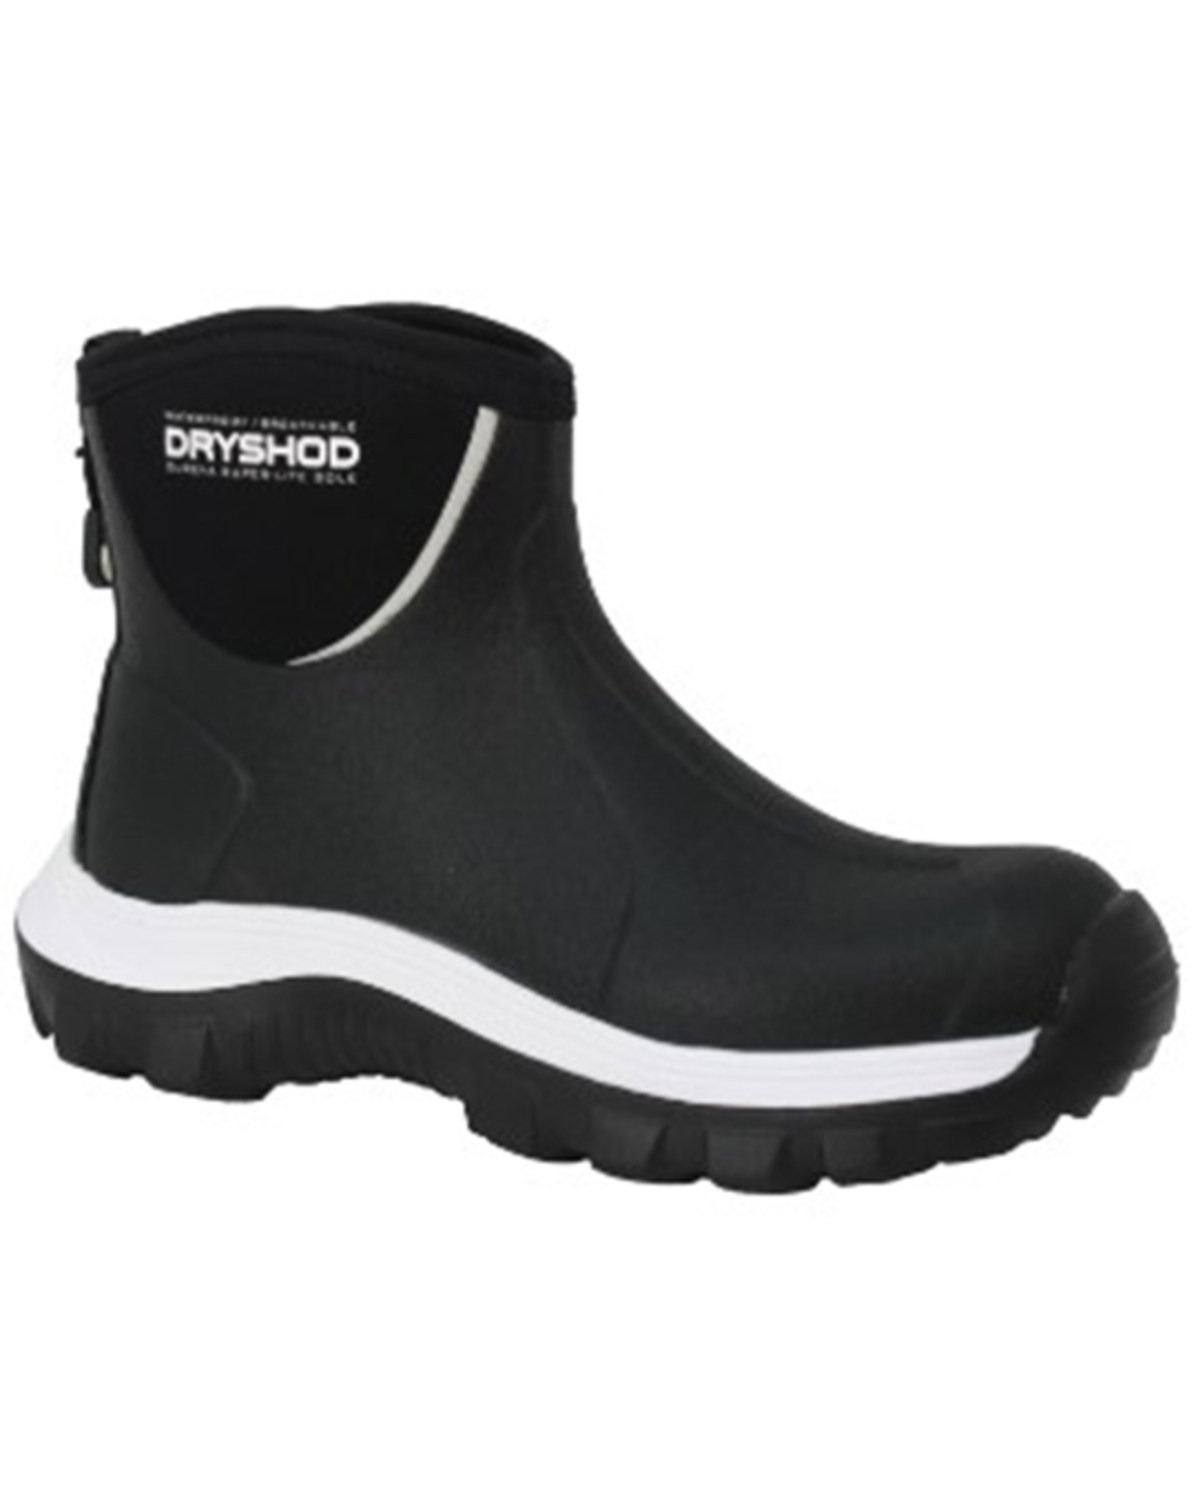 Dryshod Men's Evalusion Lightweight Ankle Waterproof Work Boots